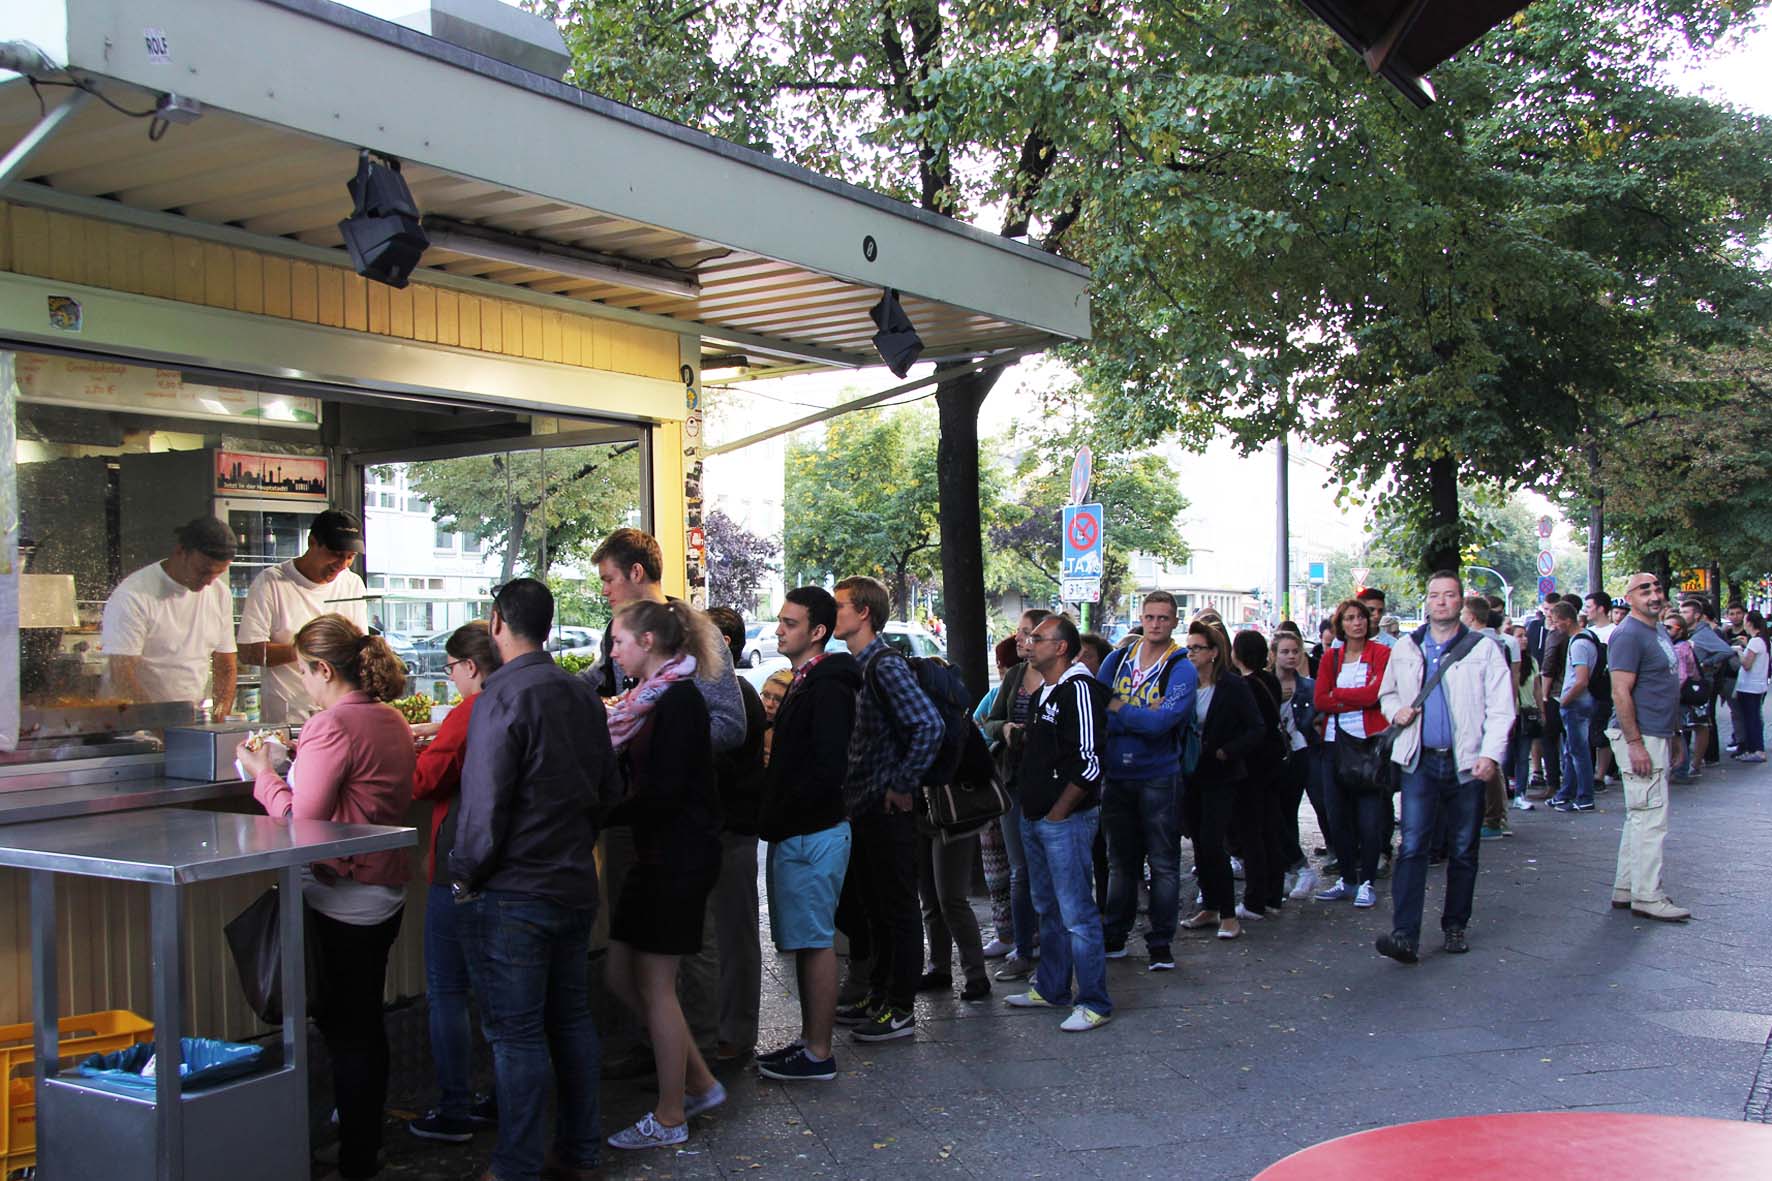 The-queue-at-Mustafas-Gem%C3%BCse-Kebap-in-Berlin-002.jpg